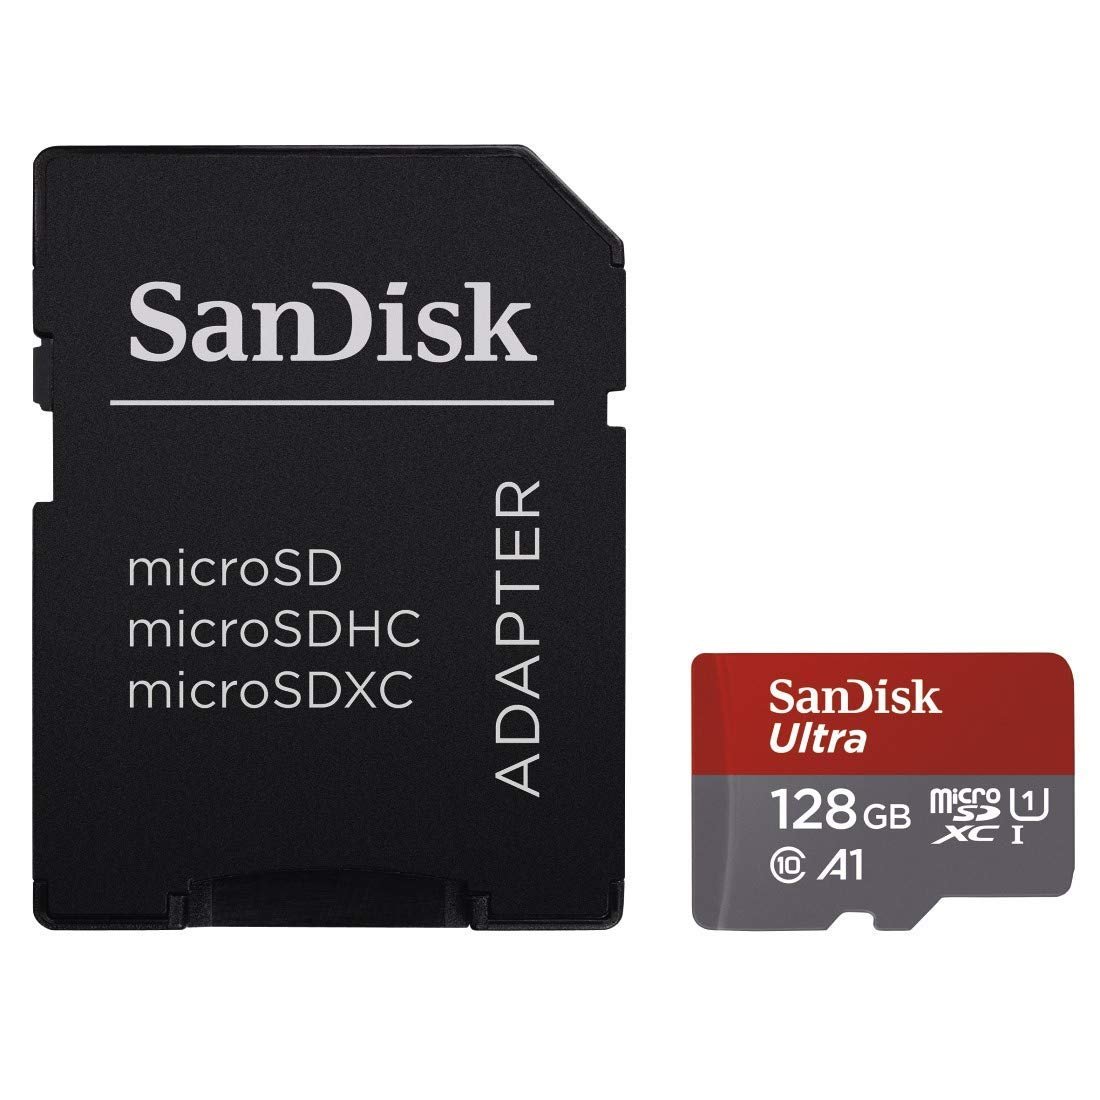 Black Friday Deal: SanDisk Ultra 128GB microSD card for $19.99